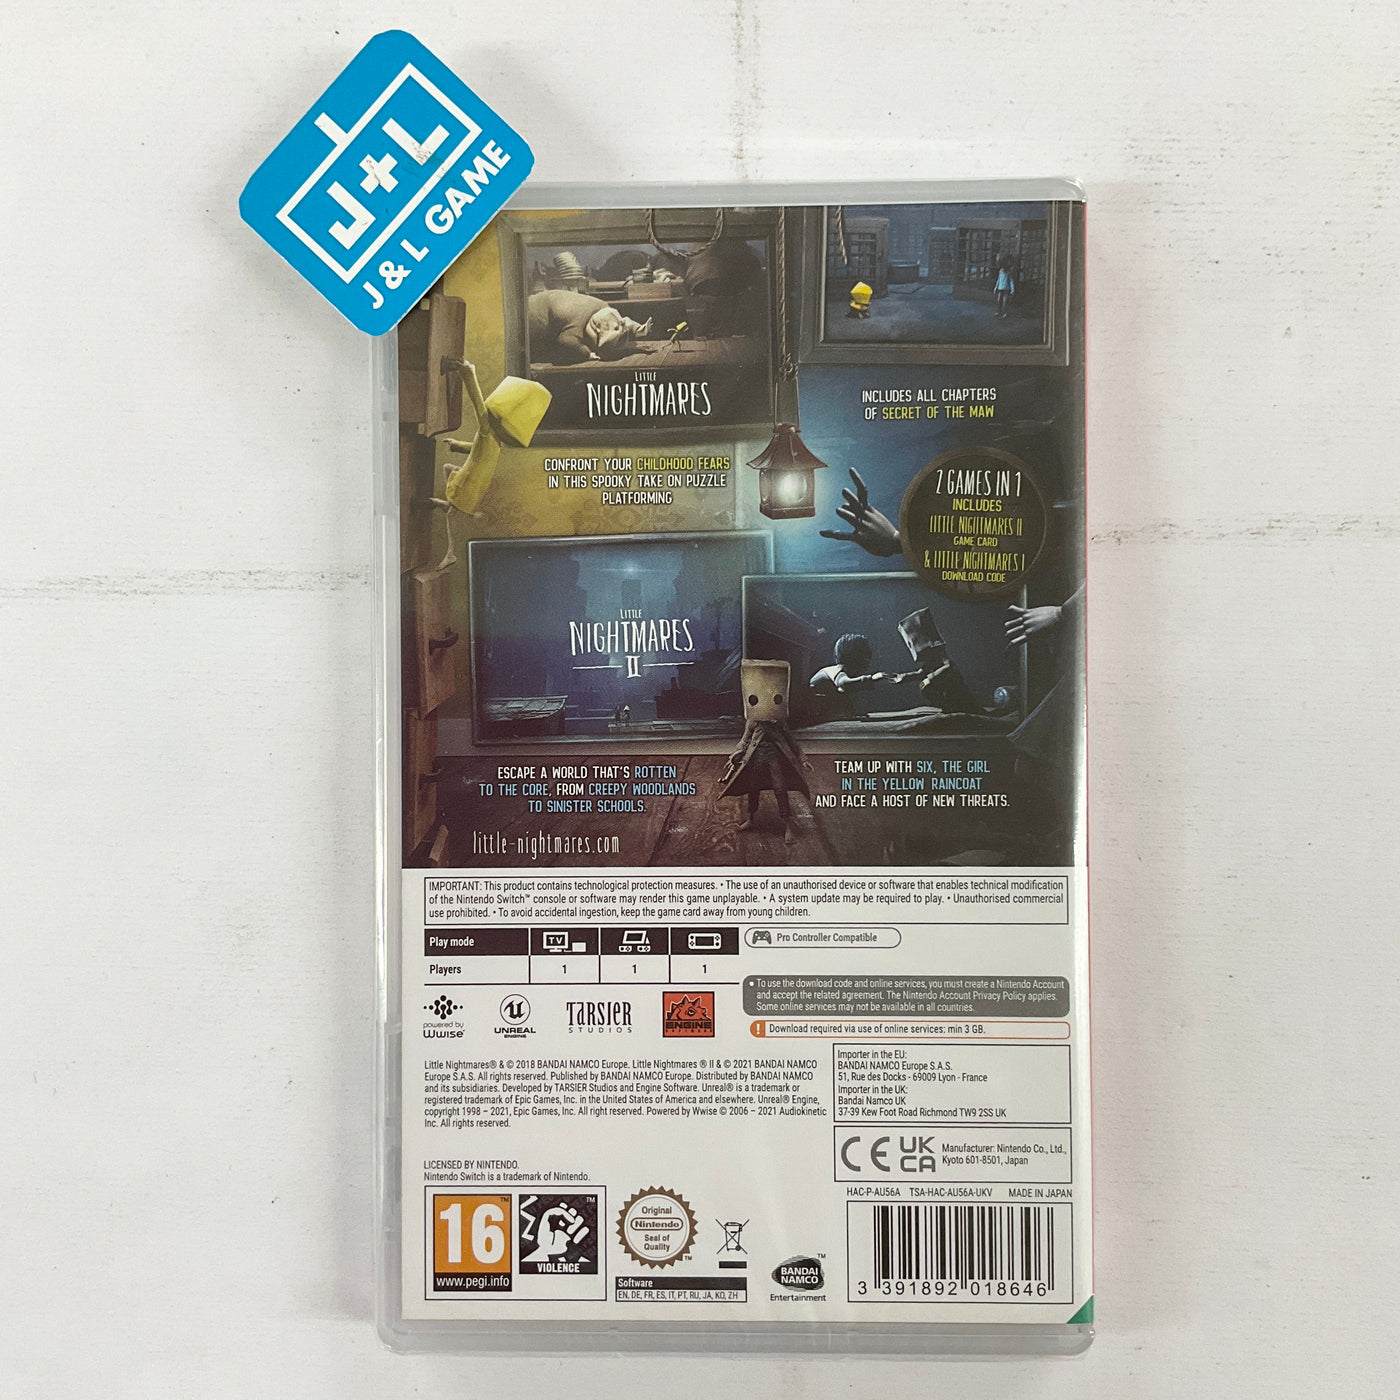 Nintendo Little Switch Game J&L (NSW) Bundle I+II Import | Nightmares - (European